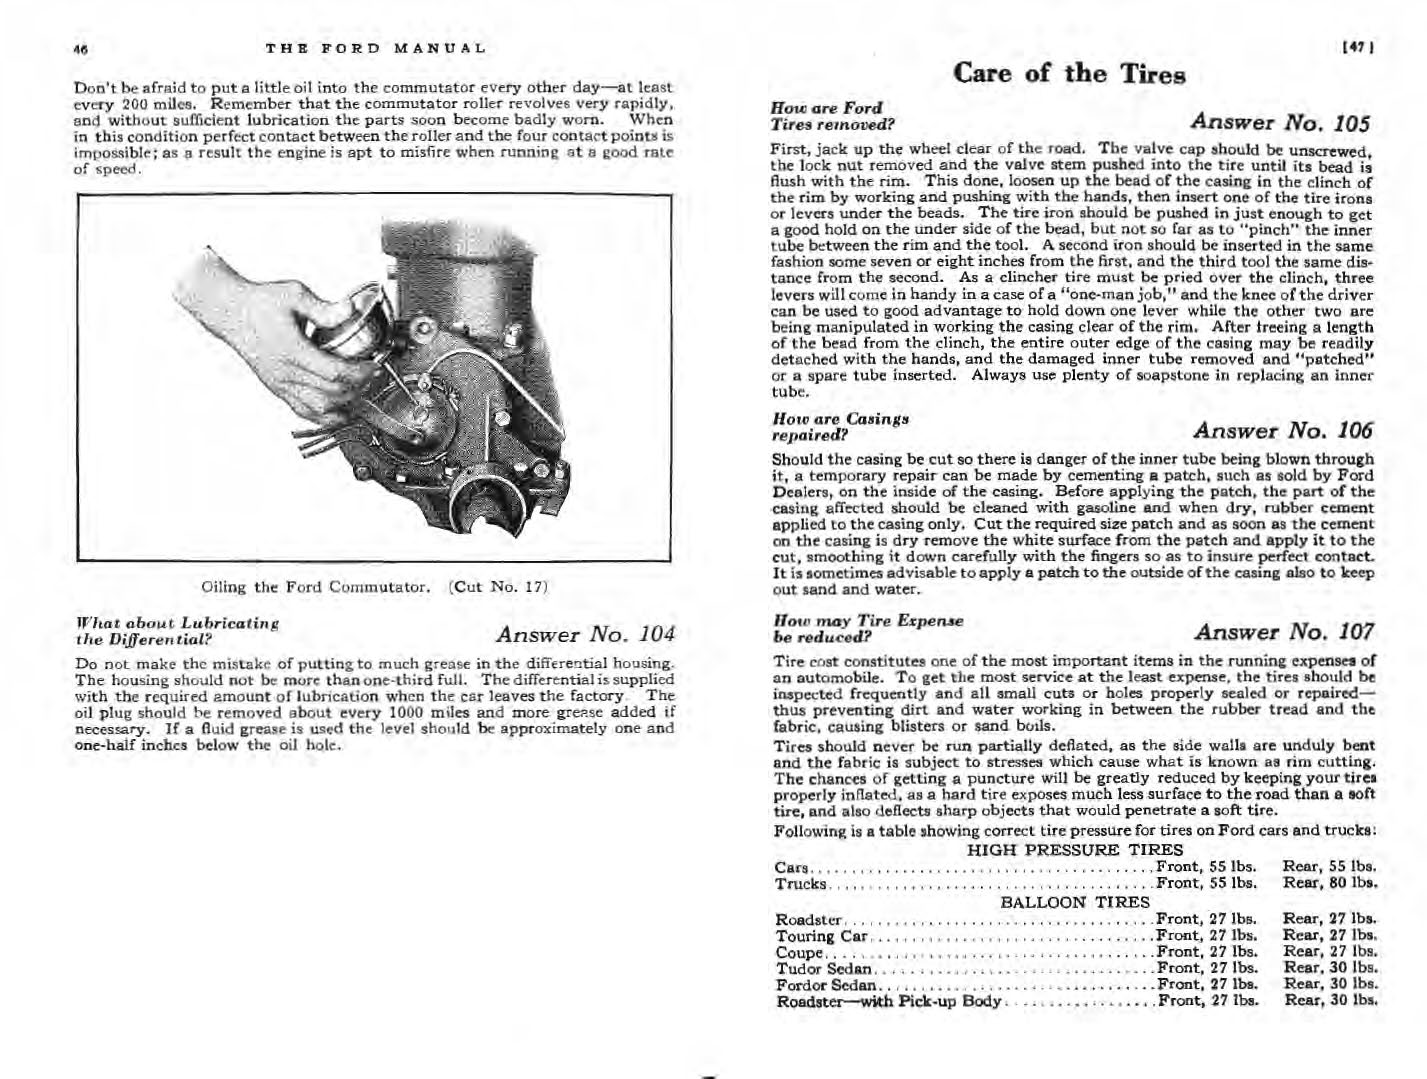 n_1926 Ford Owners Manual-46-47.jpg